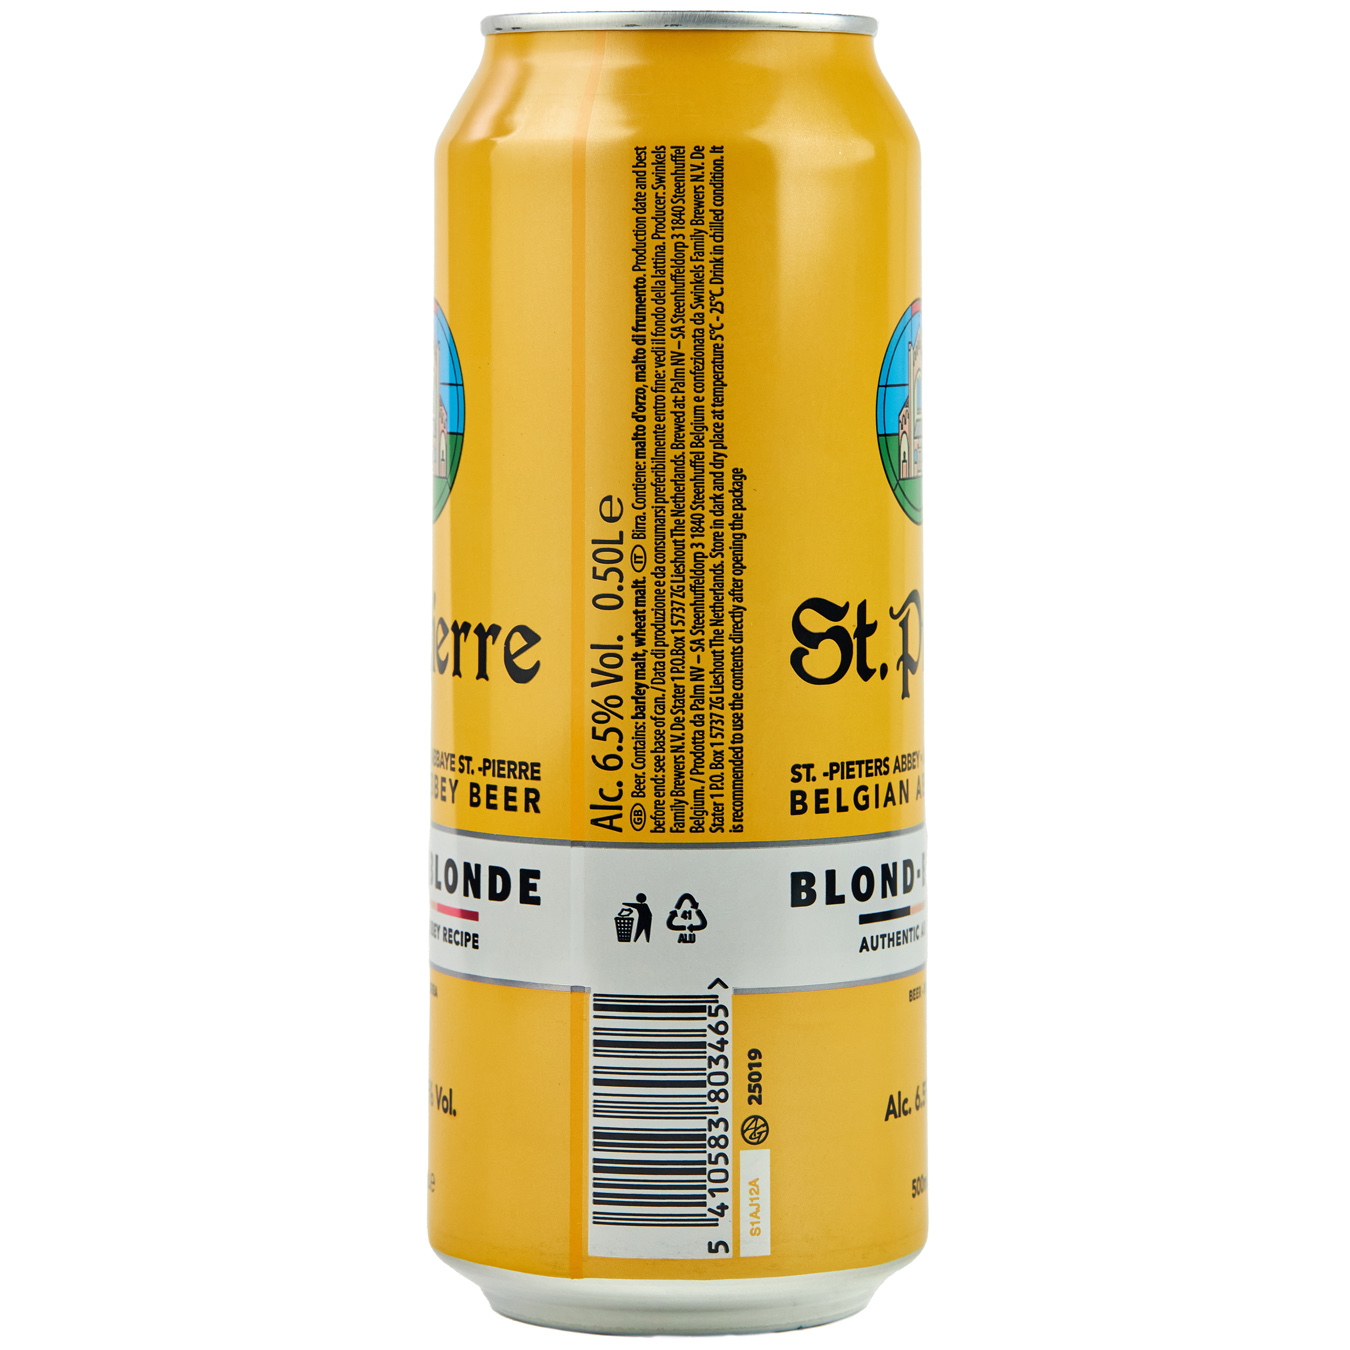 St. Pierre Light beer St. Pierre Blonde 6.5% 0.5l 2